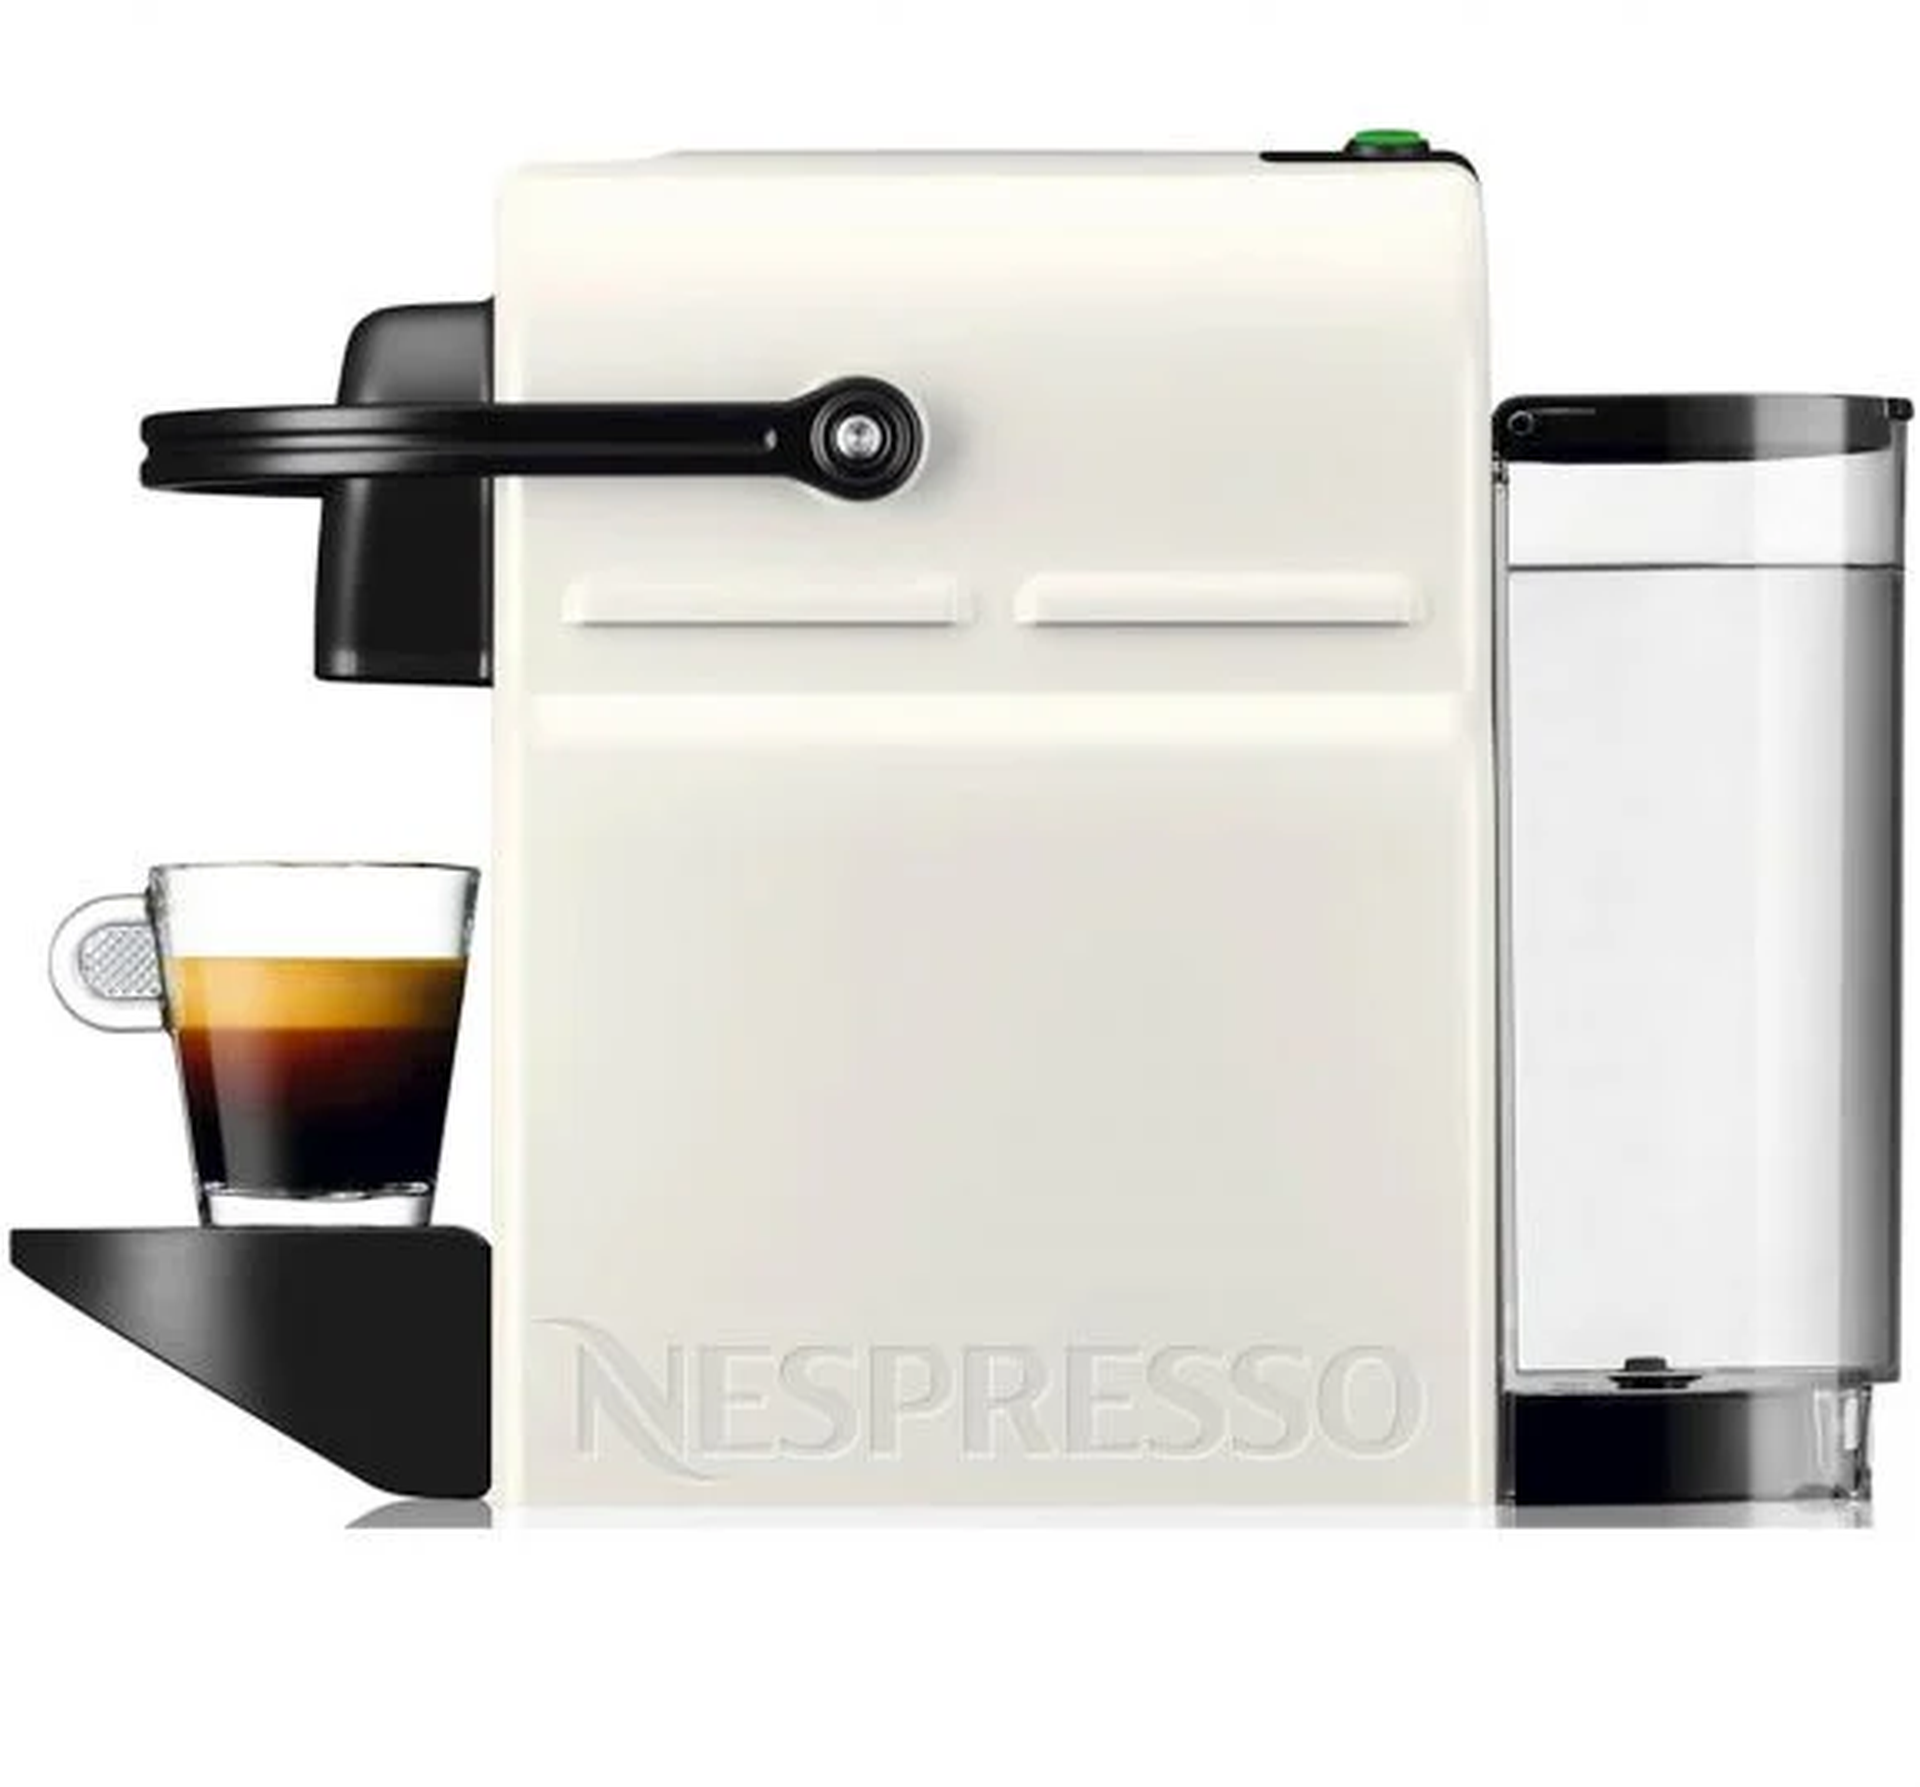 10942216223 Nespresso Inissia white - Kapselmaskine Husholdning,Kaffe,Kapsel kaffemaskiner 2100009390 Inissia white